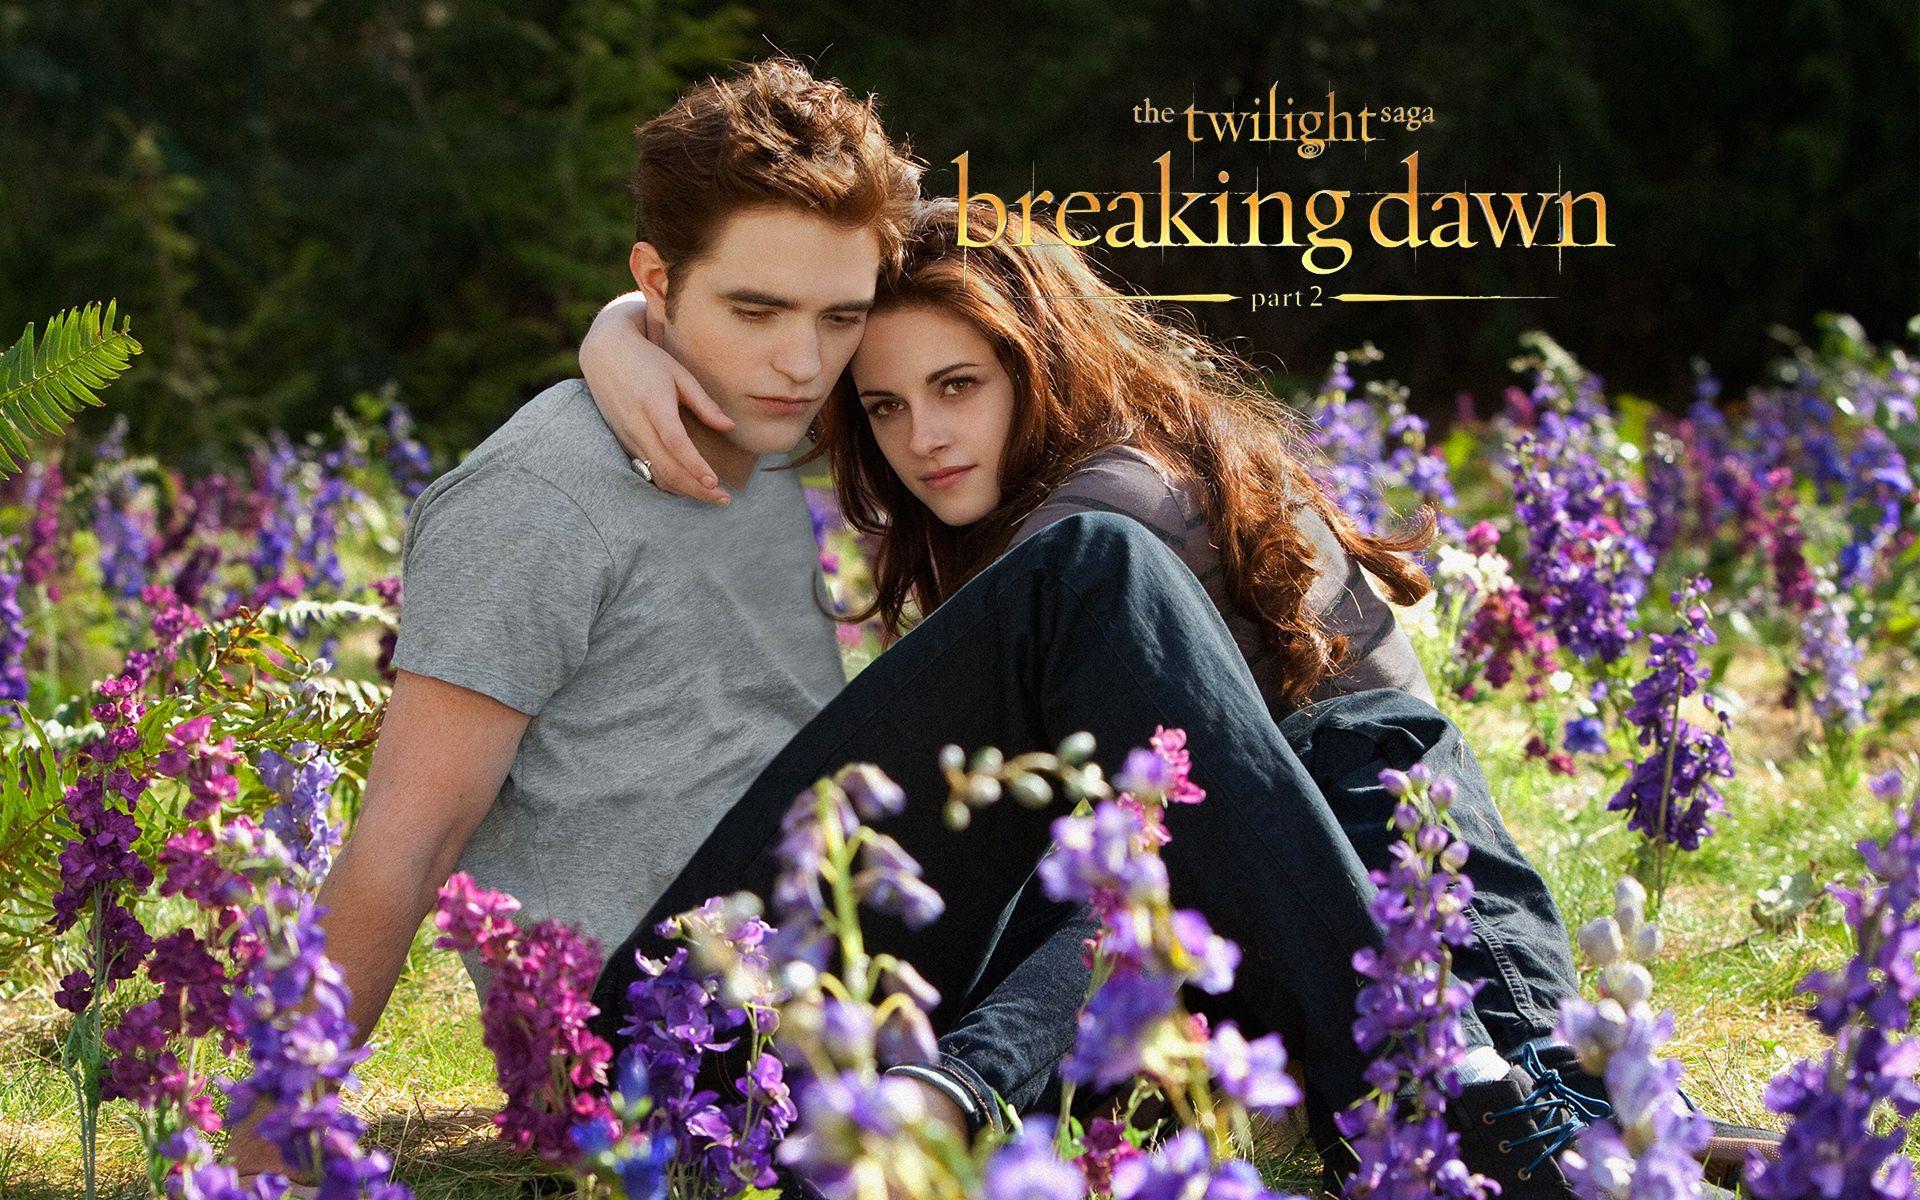 The Twilight Saga: Breaking Dawn Part II image BD part 2 wallpaper